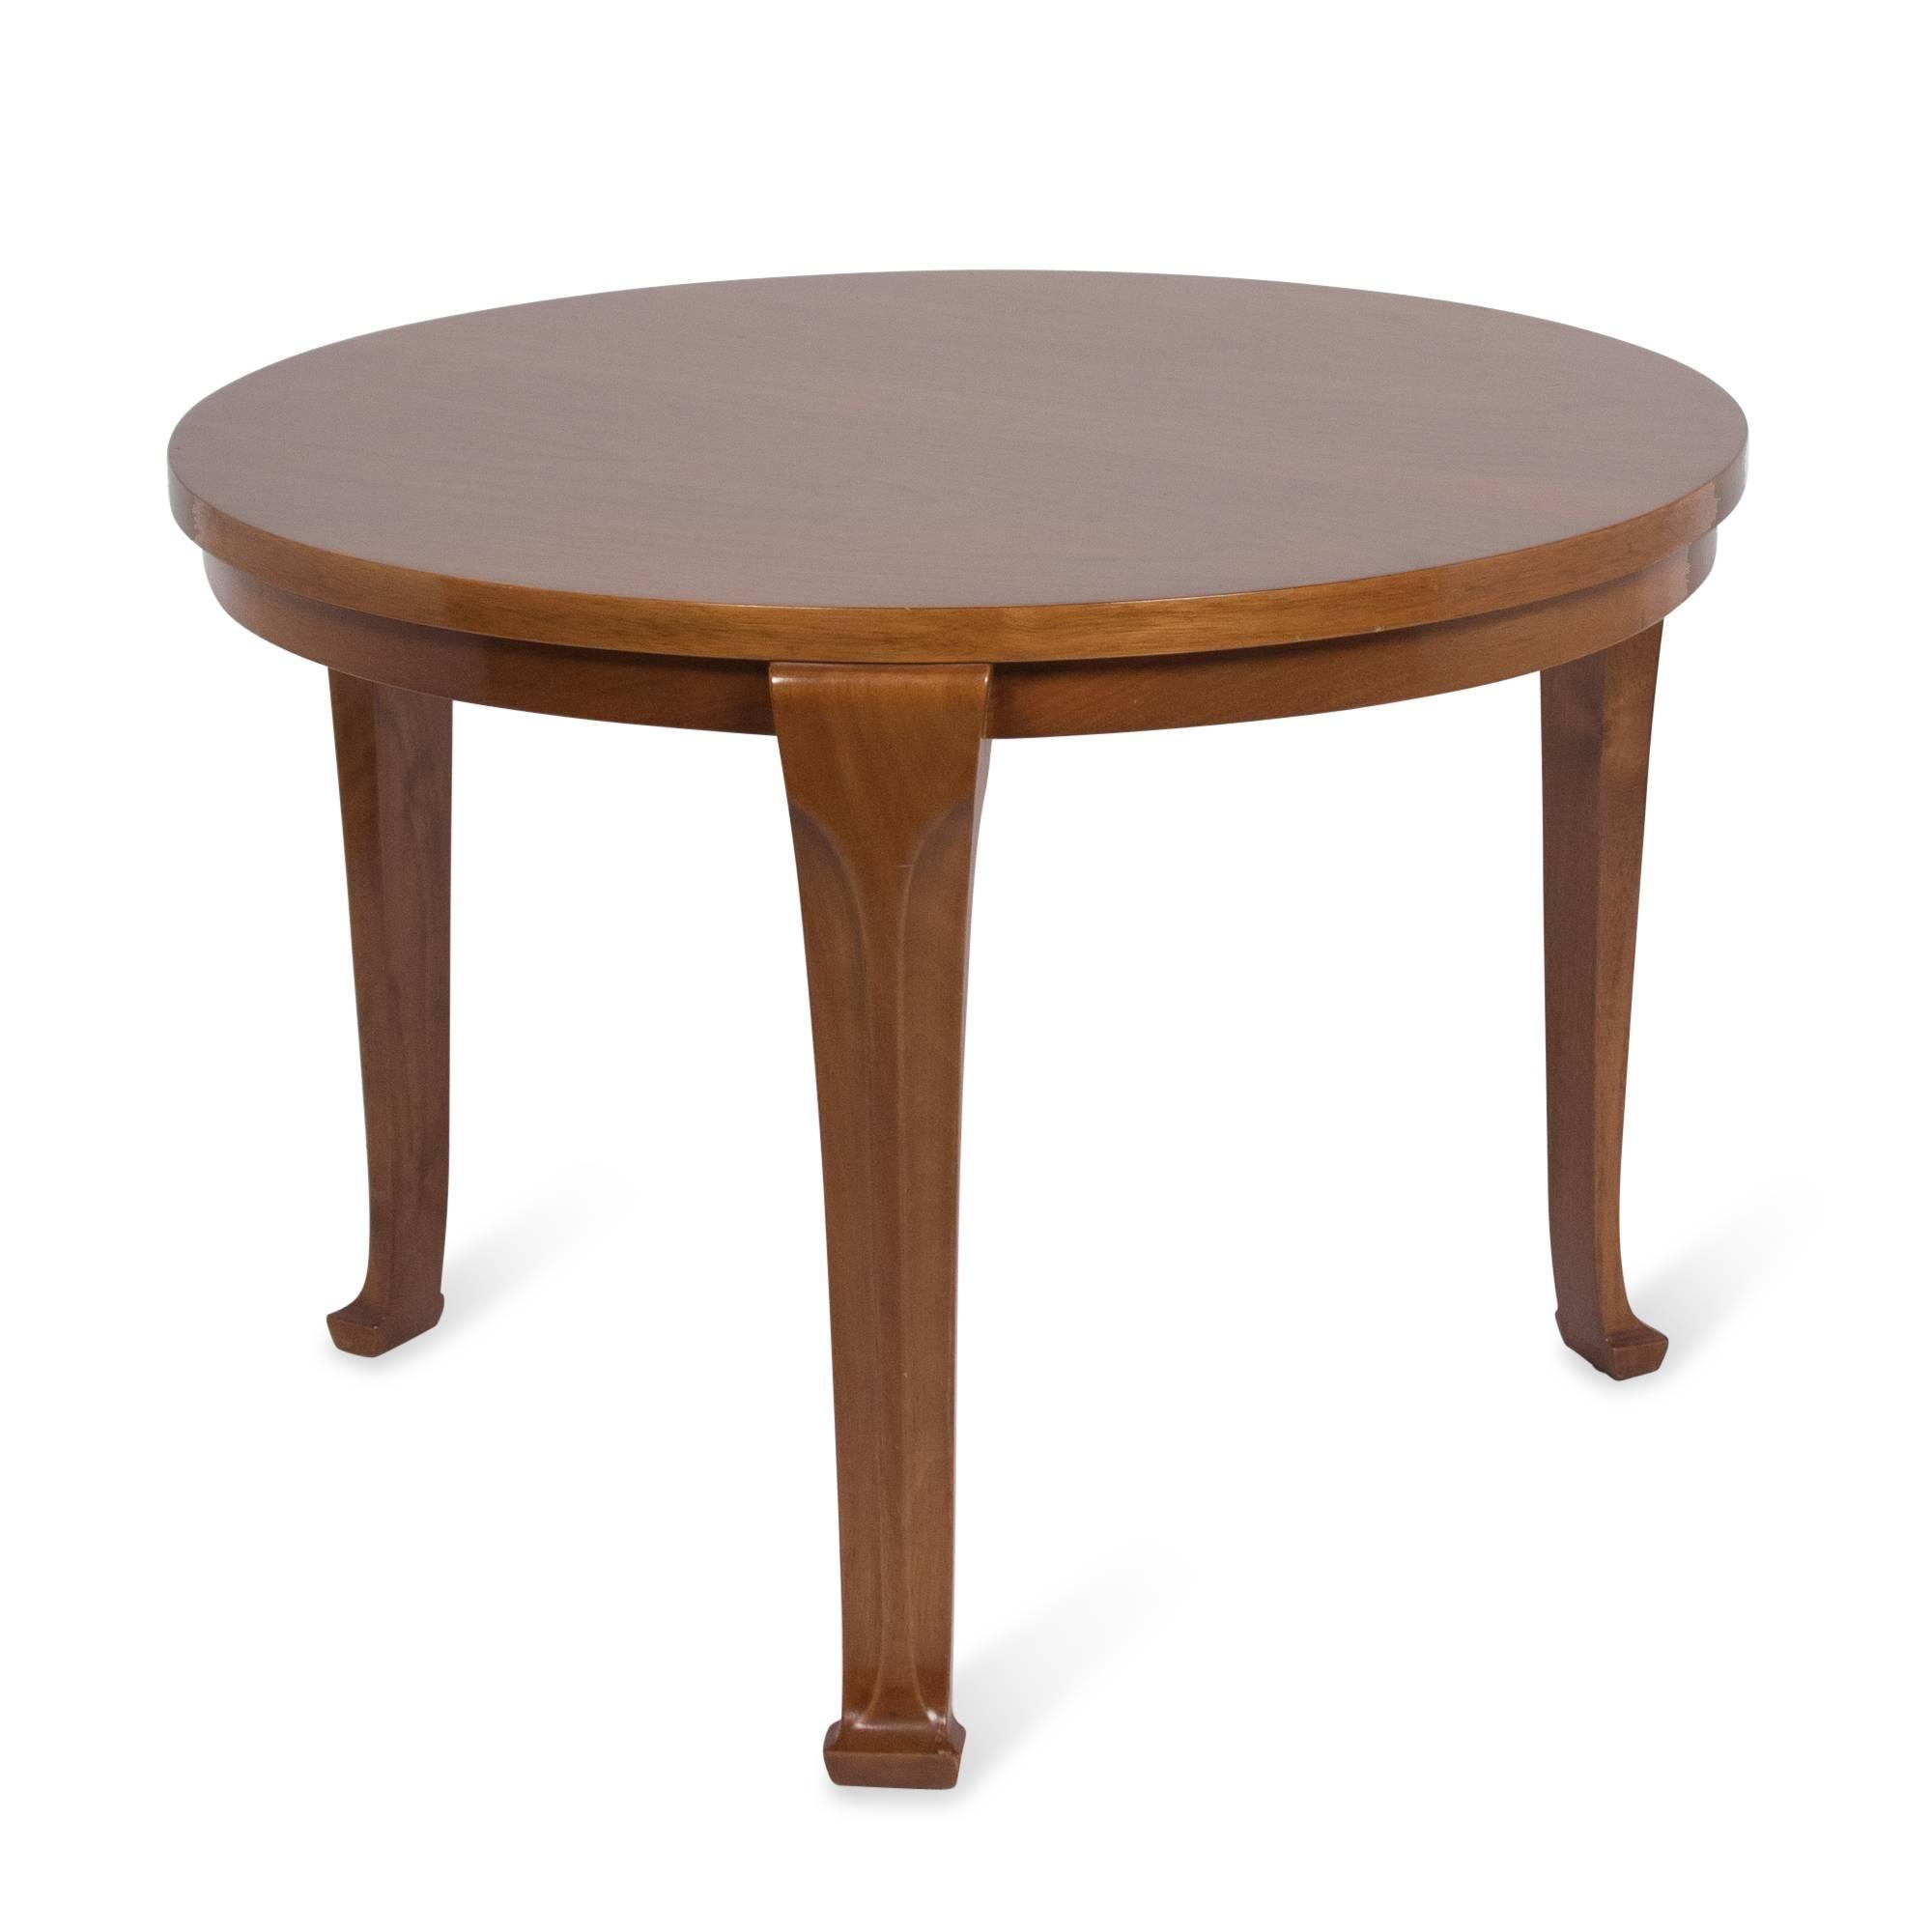 Circular three-legged walnut end table by T.H. Robsjohn-Gibbings for Saridis; American designer for Greek company, 1960s. 24